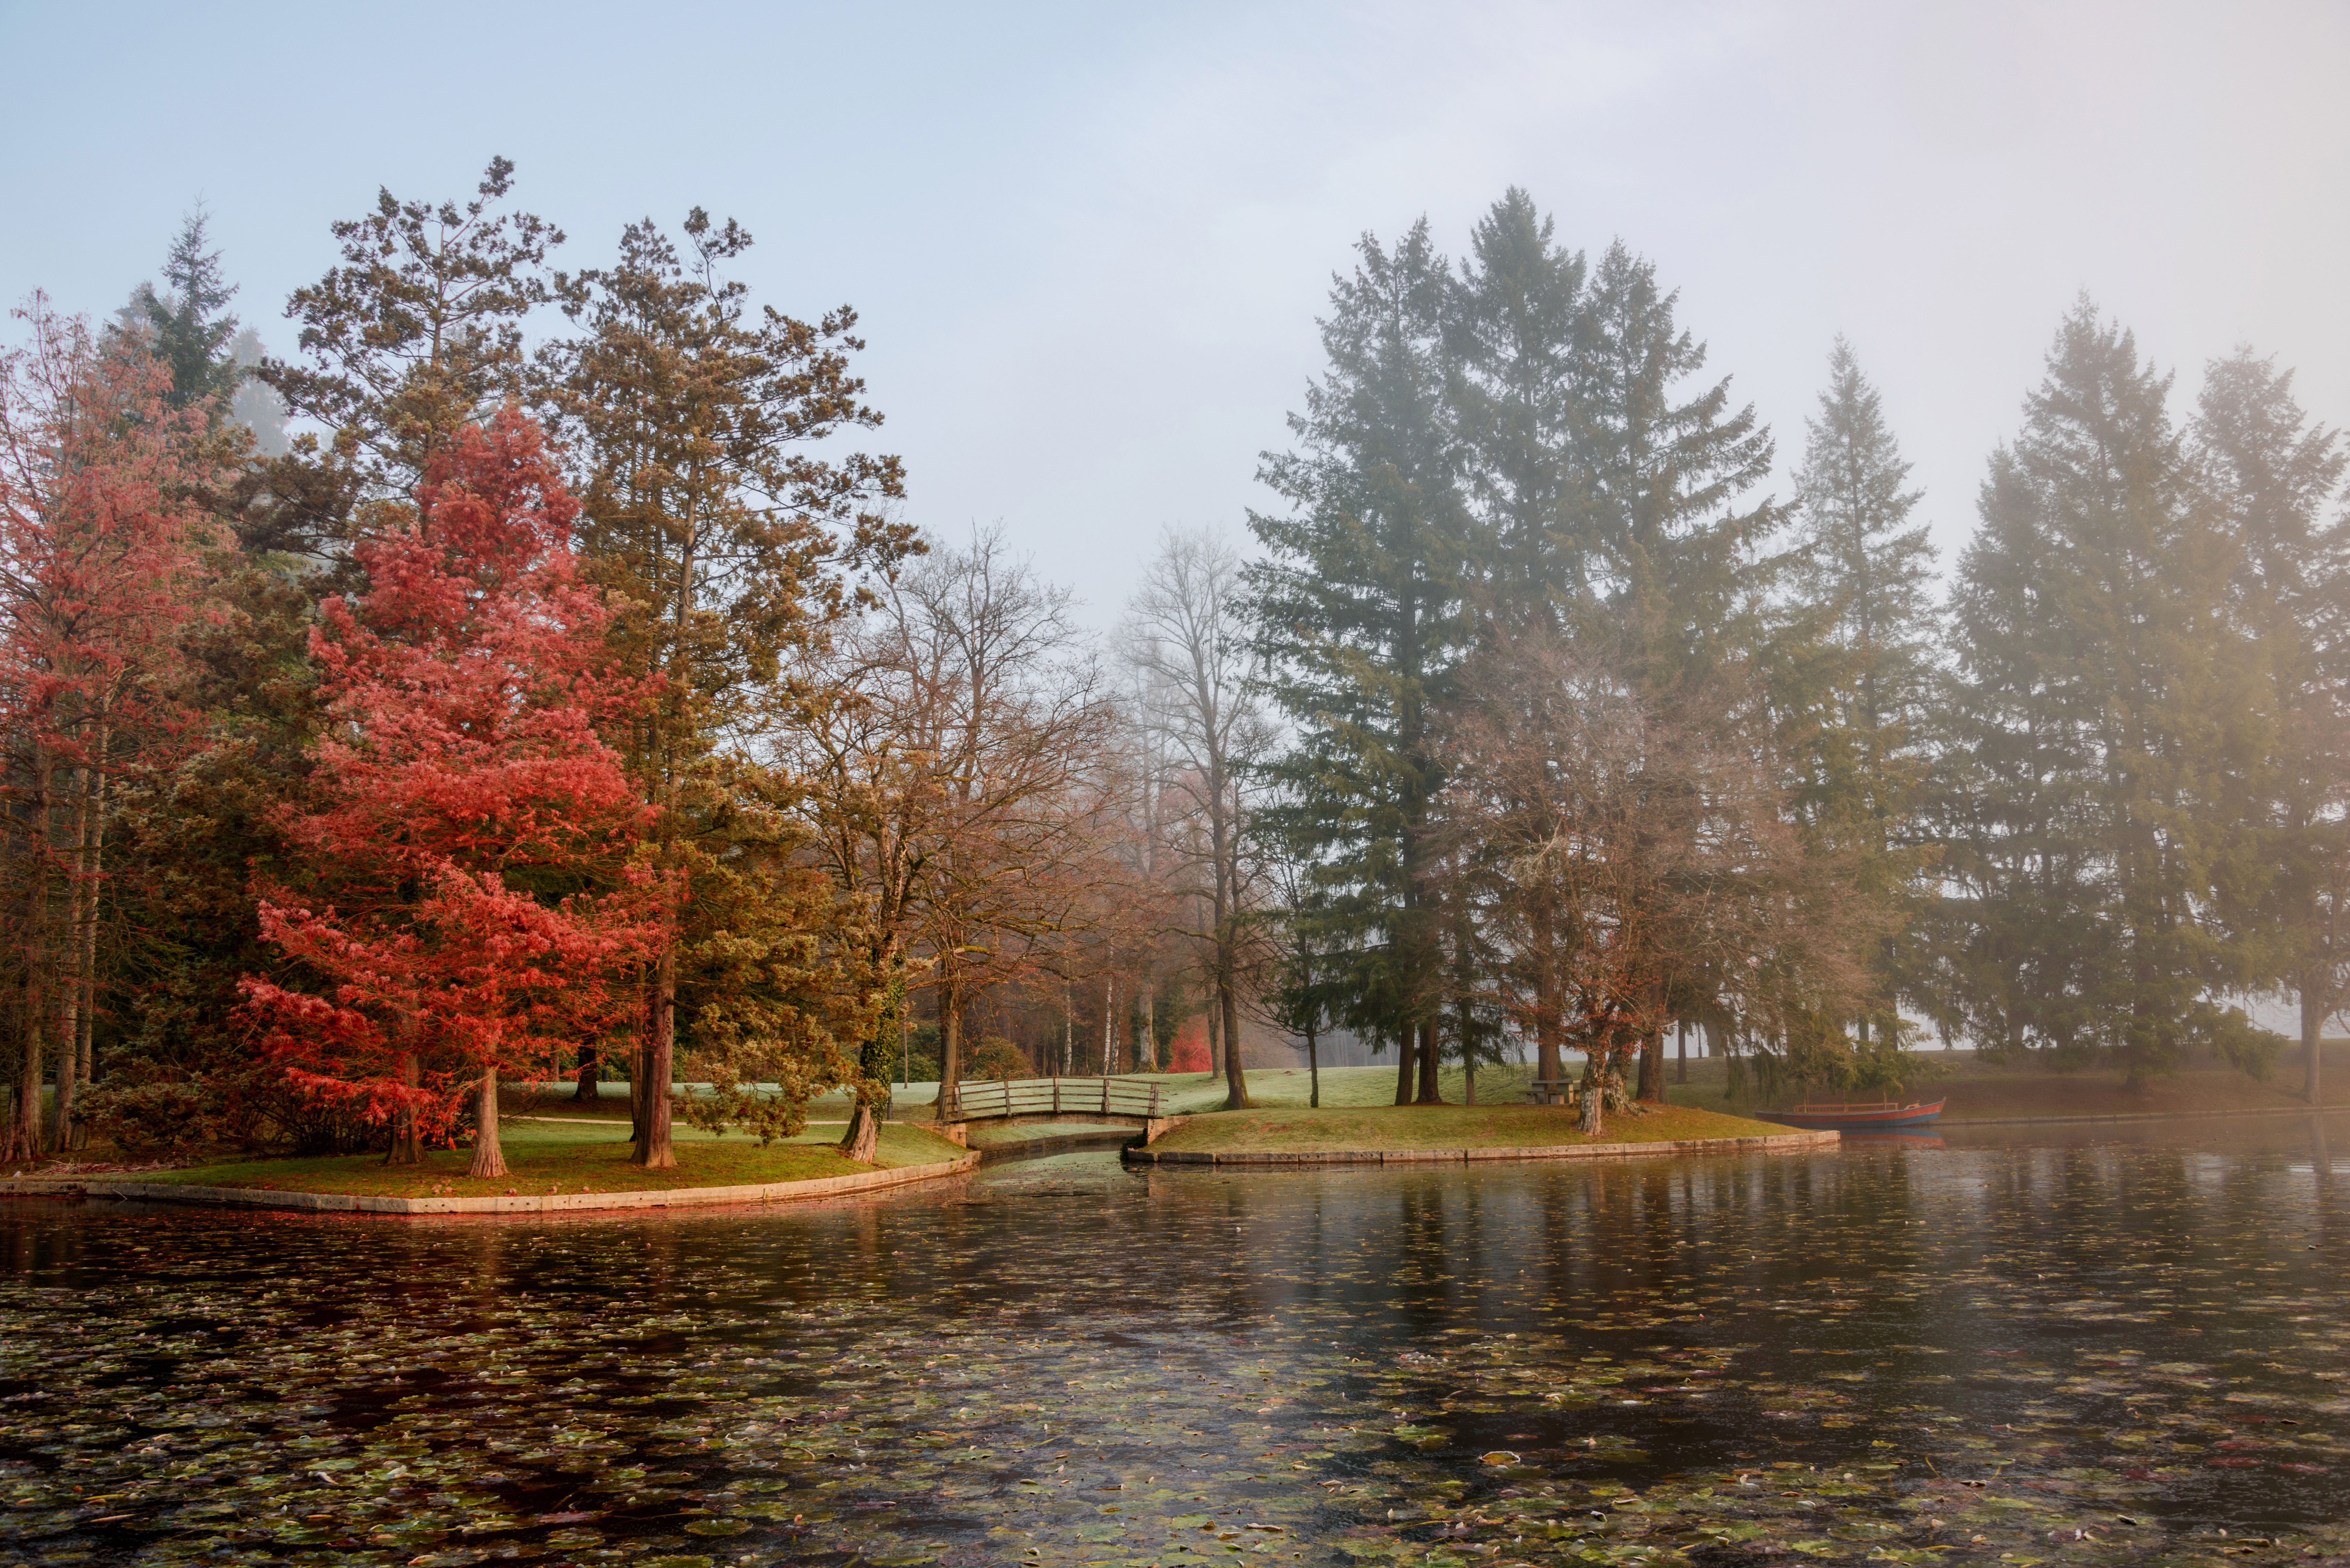 Dreamy Pixel | Frozen autumn pond - Dreamy Pixel